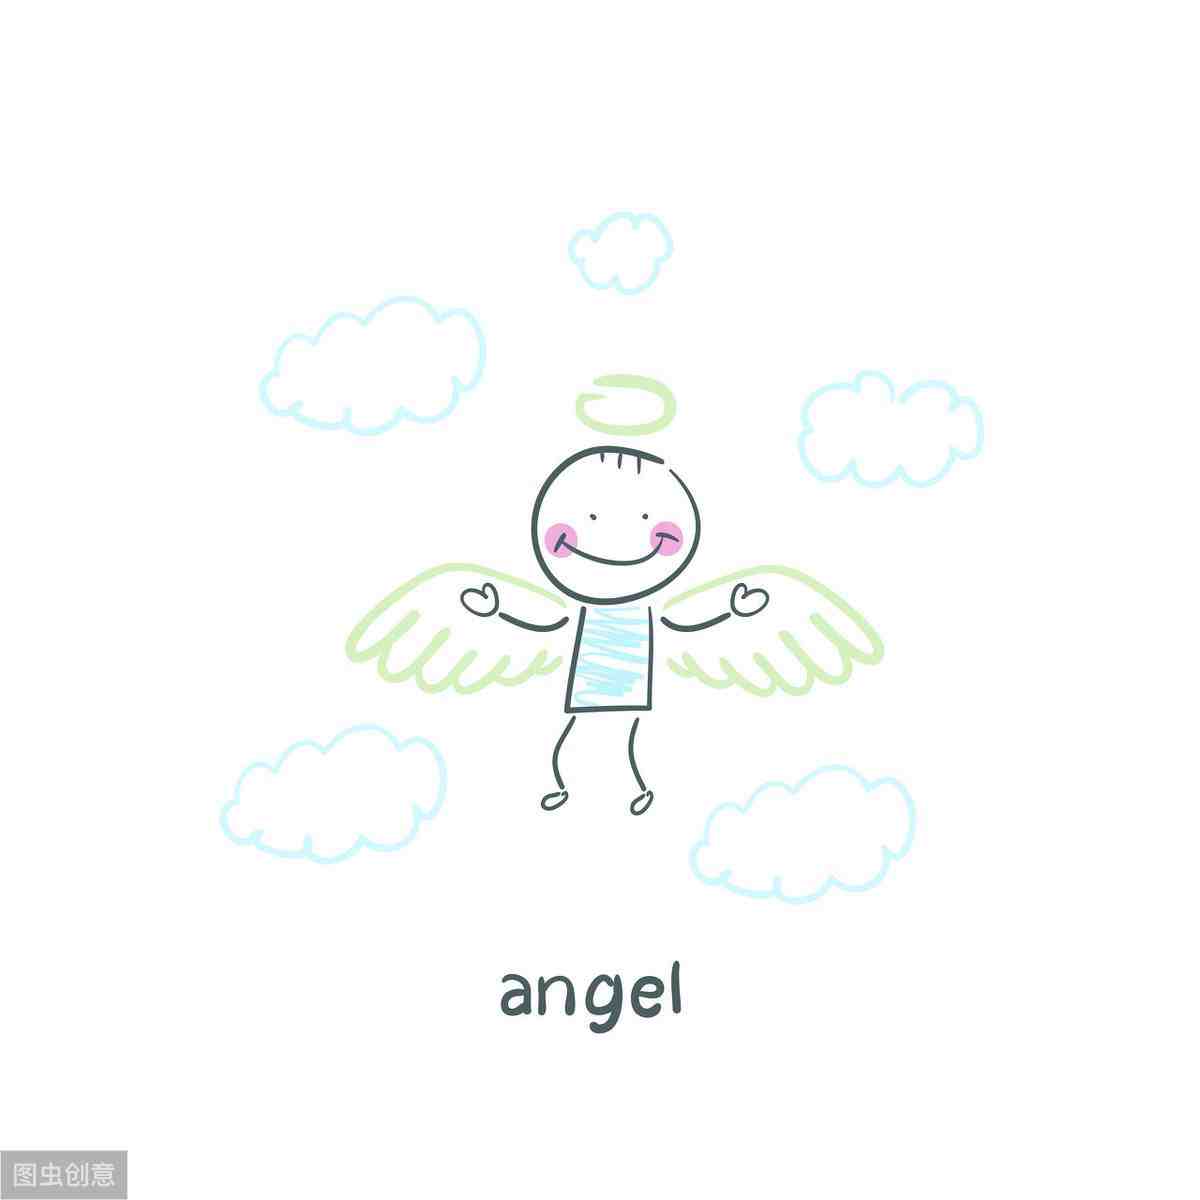 天使的英文|“angle”和“angel”哪个是天使？